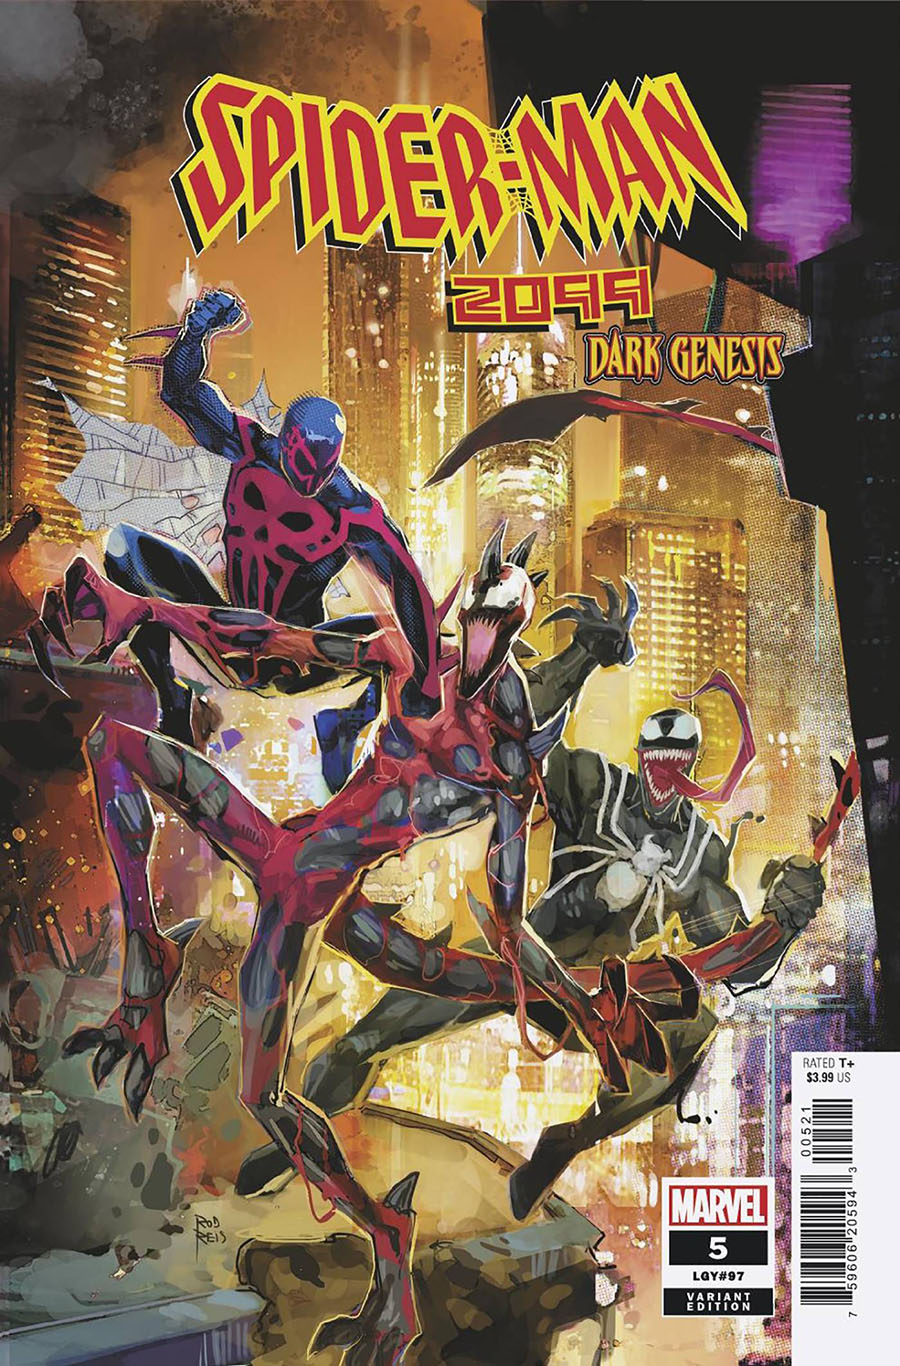 Spider-Man 2099 Dark Genesis #5 Cover B Variant Rod Reis Connecting Cover